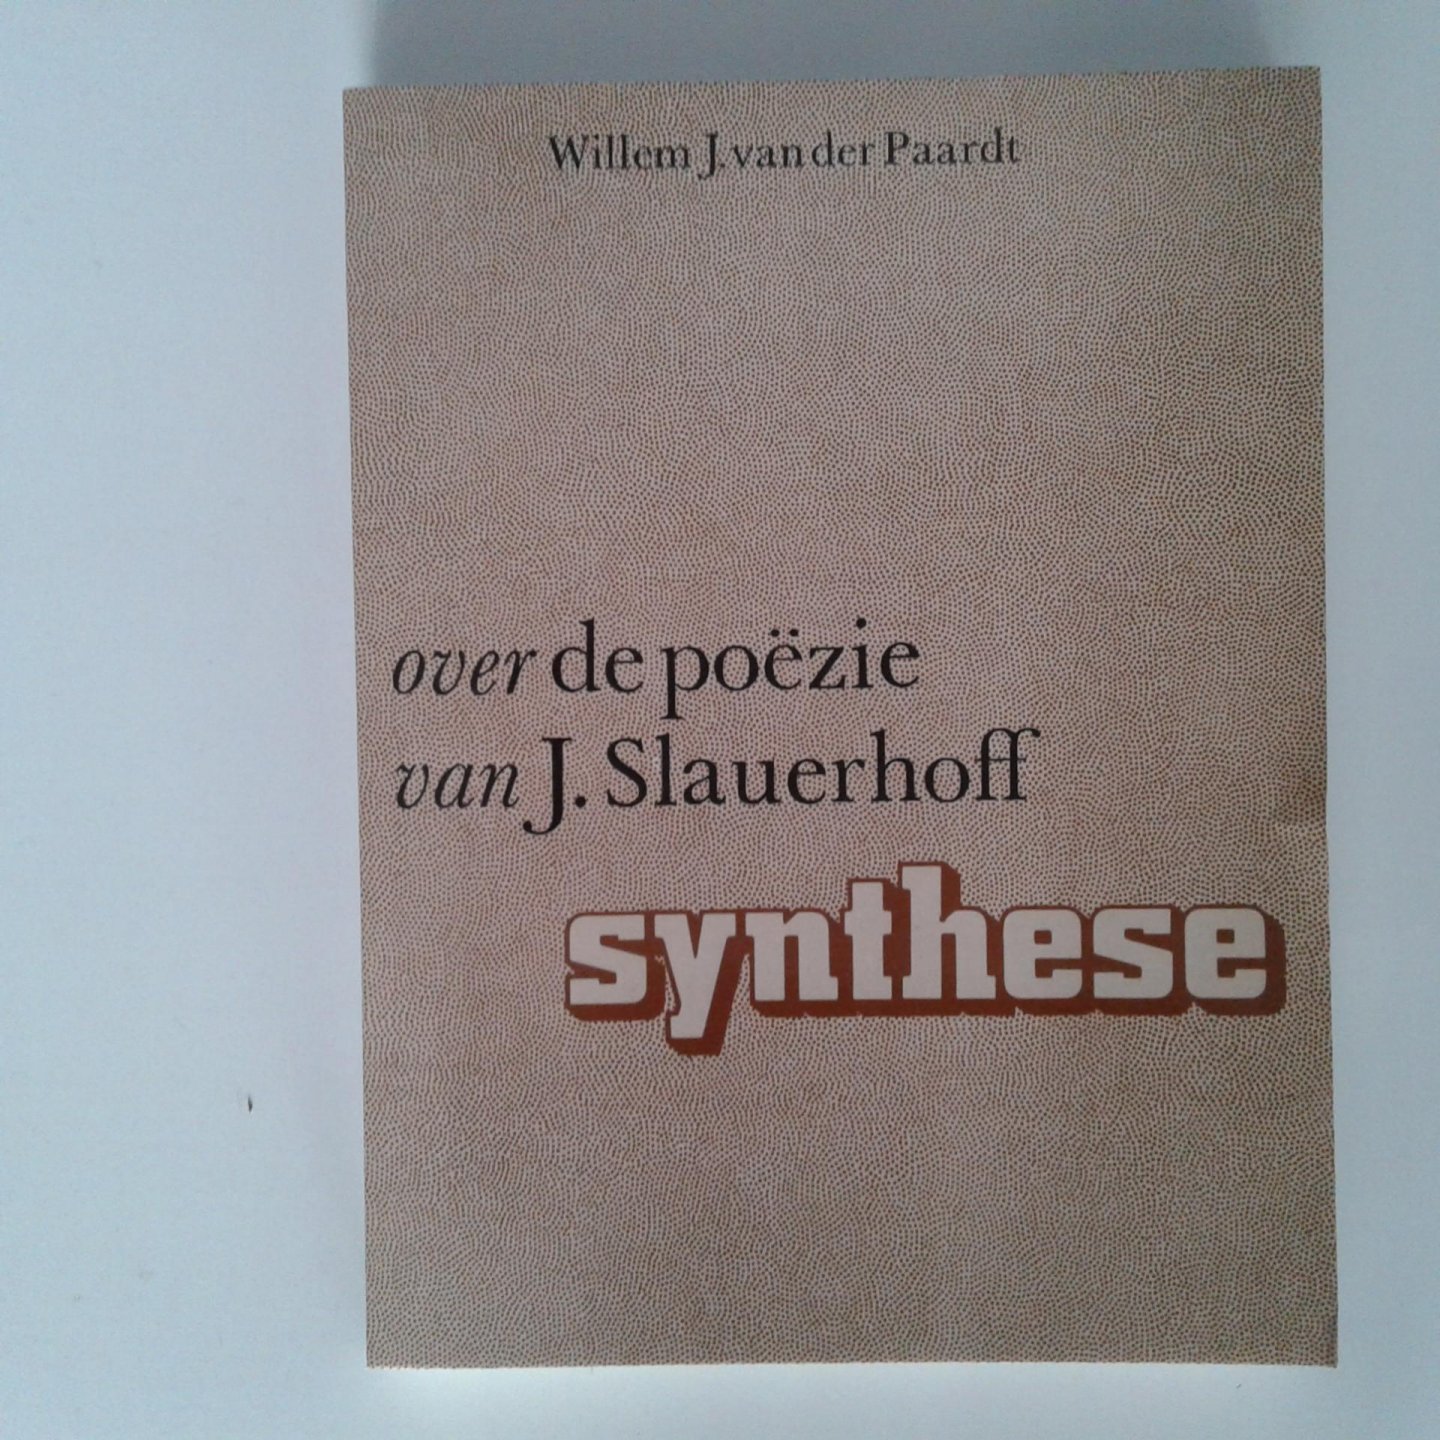 Paardt, Willem J. van der ; J. Slauerhoff - Over poezie van j. slauerhoff ; J. Slauerhoff